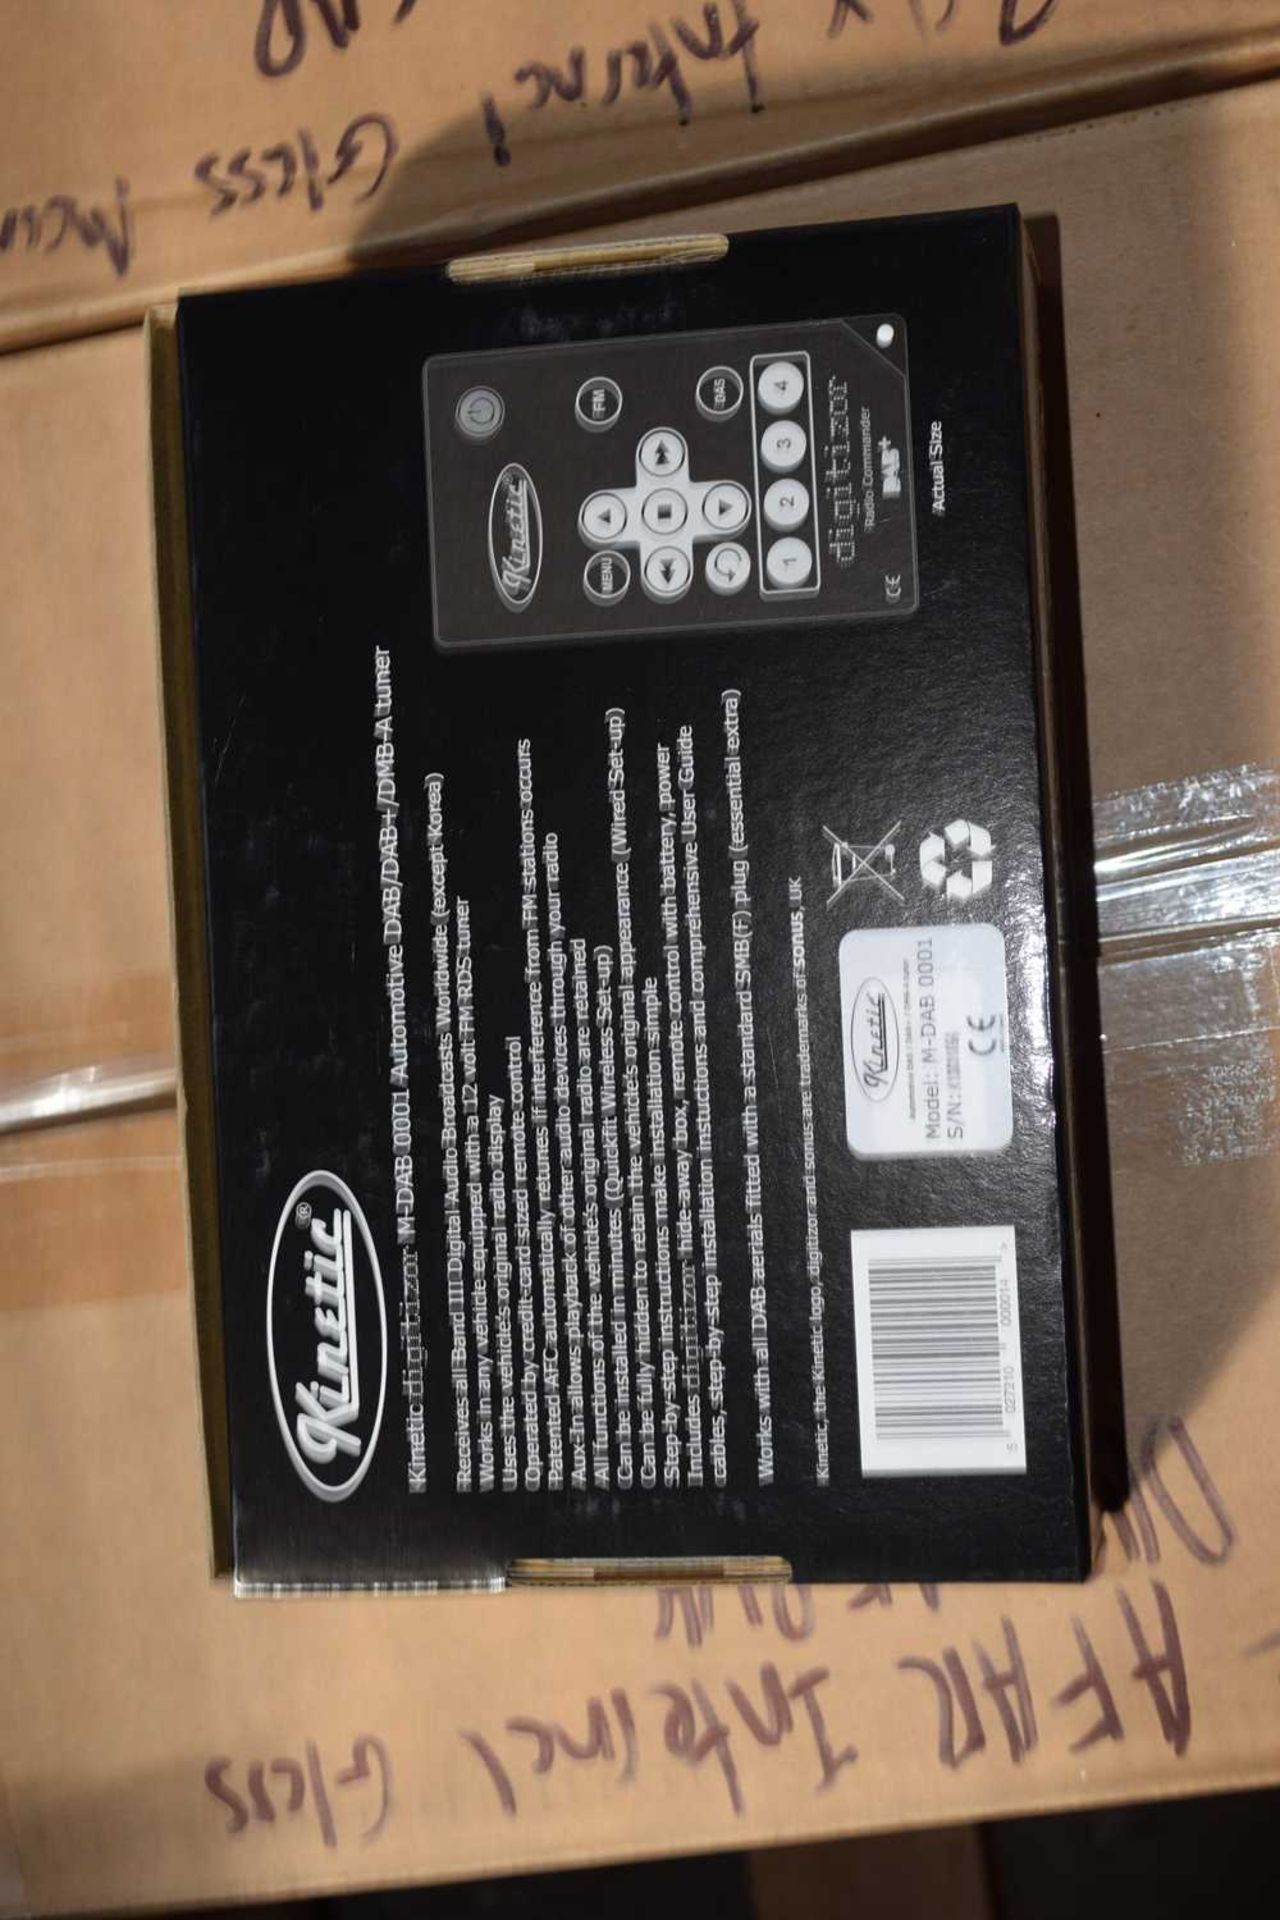 Box containing 12 Kinetic Digitizor Add-on Dab Car Radio - Image 2 of 4